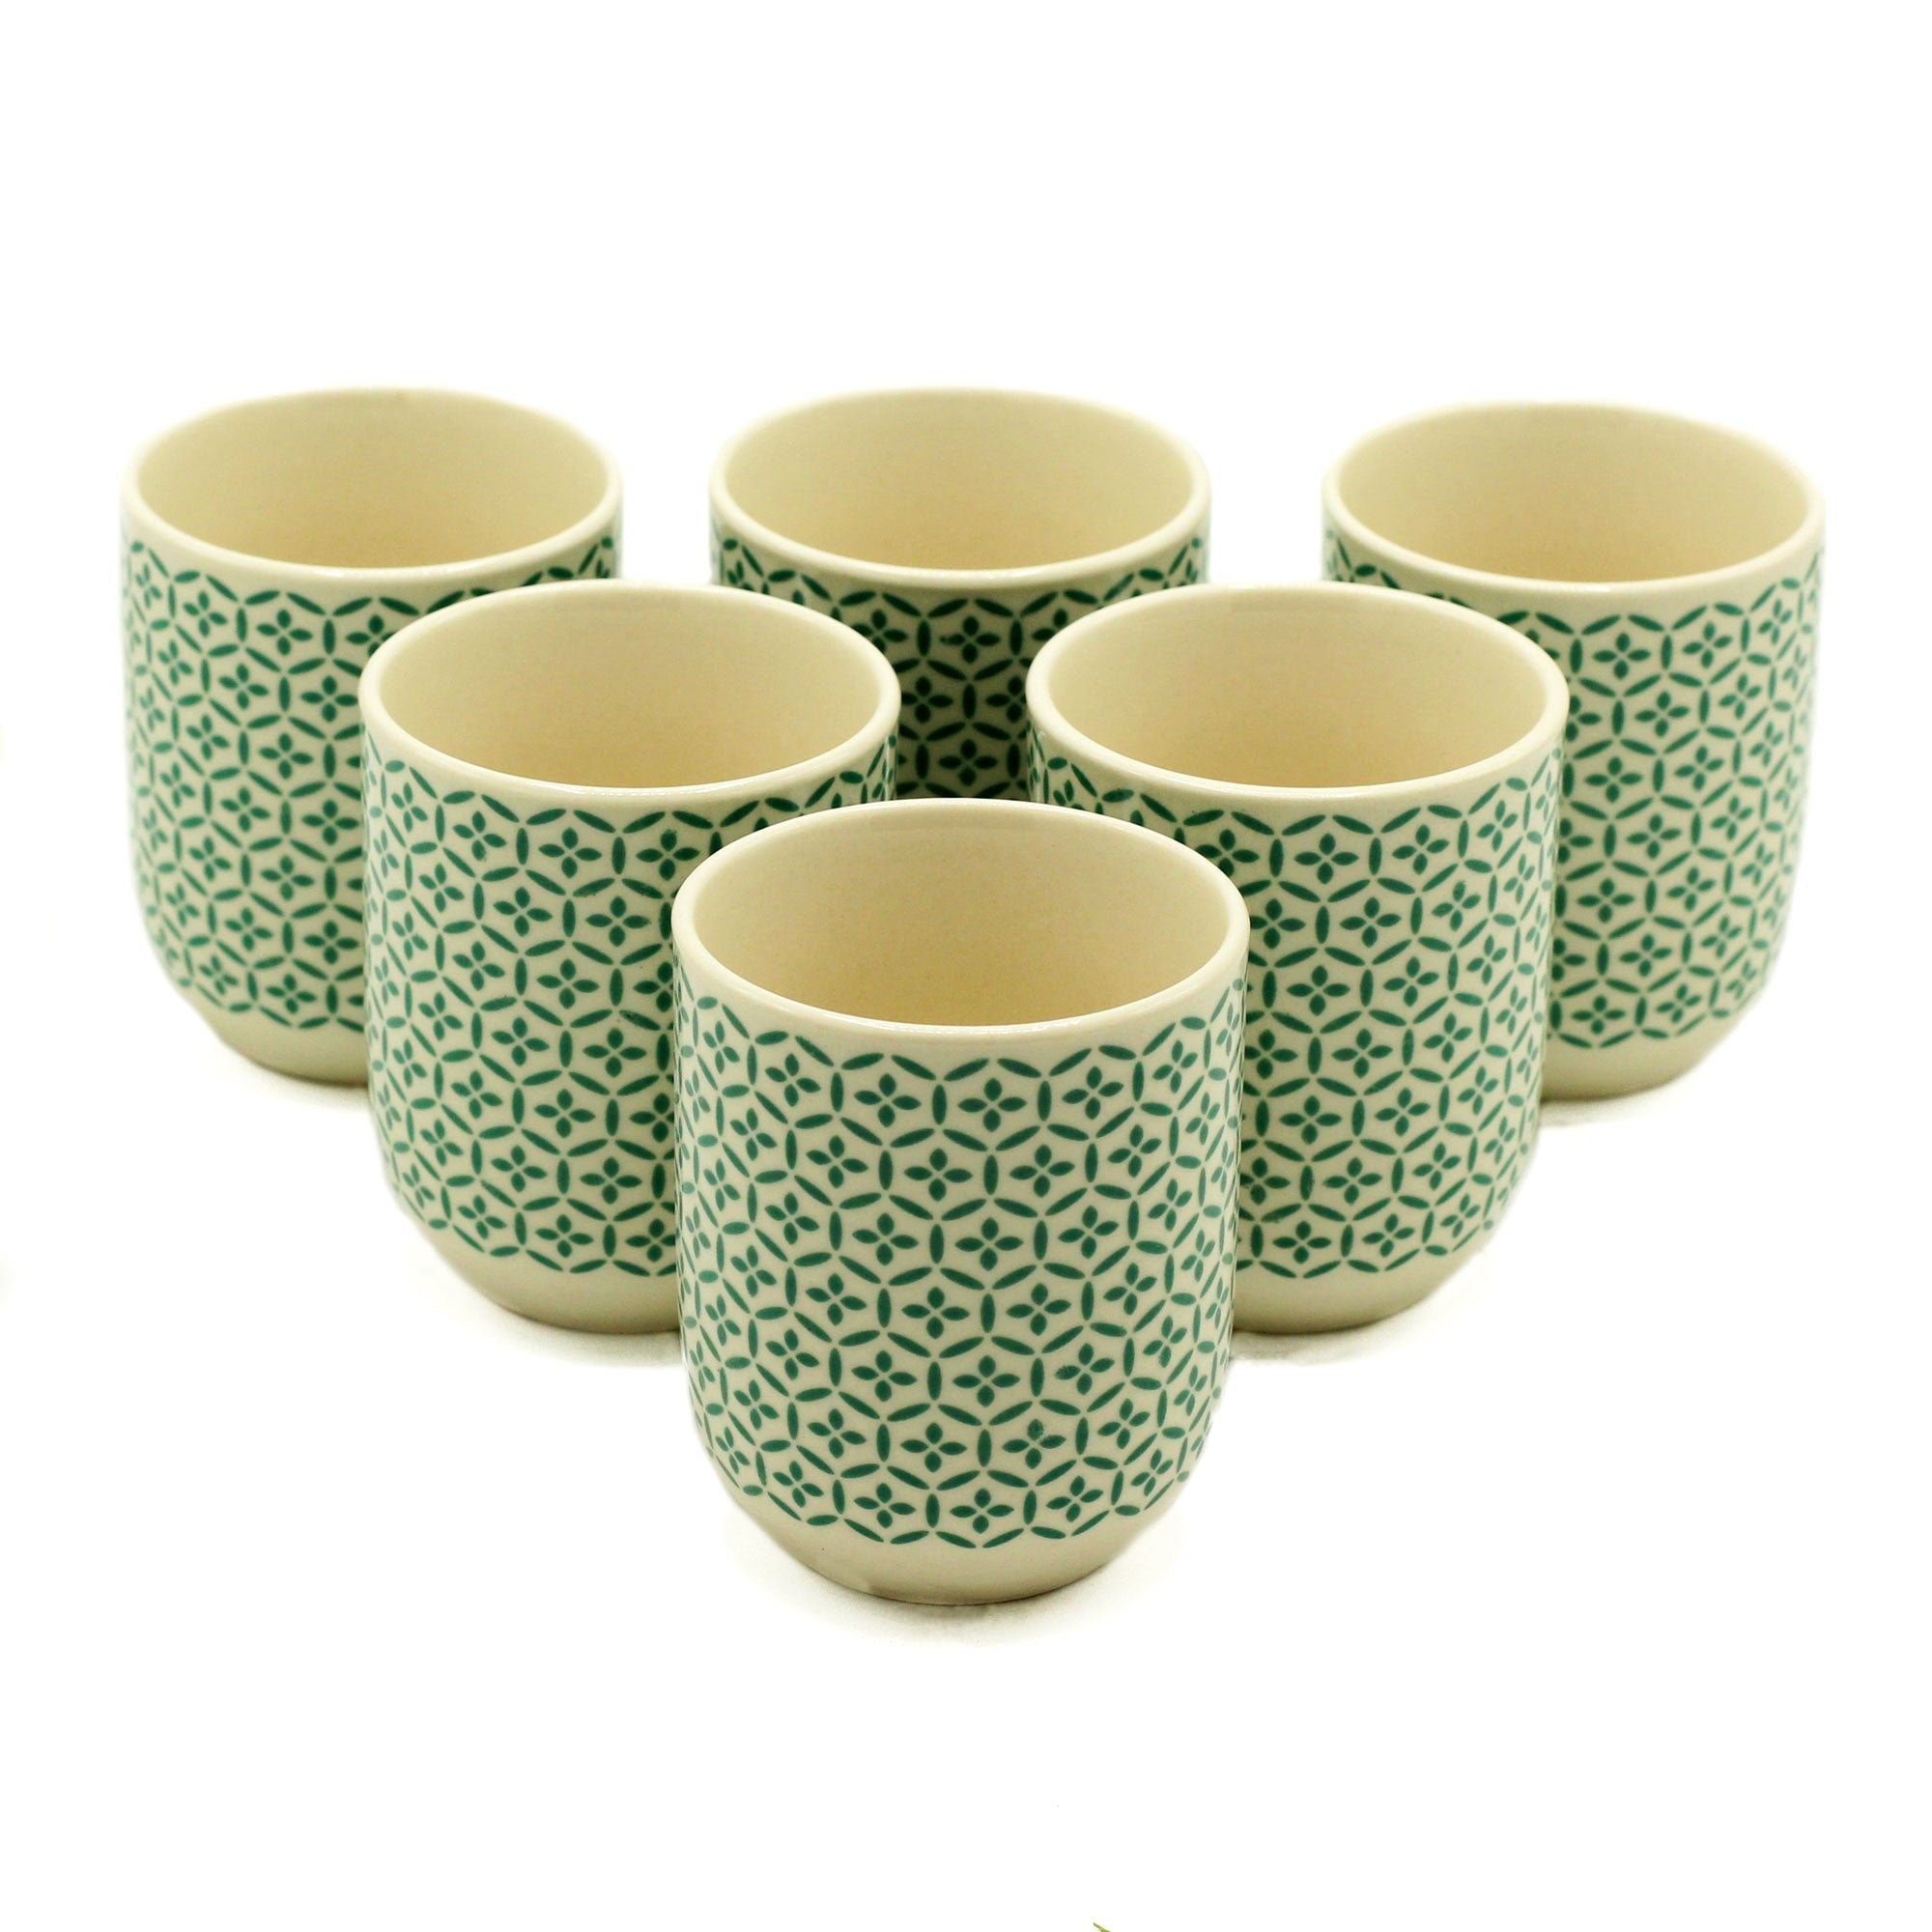 View Herbal Tea Cups Green Mosiac information